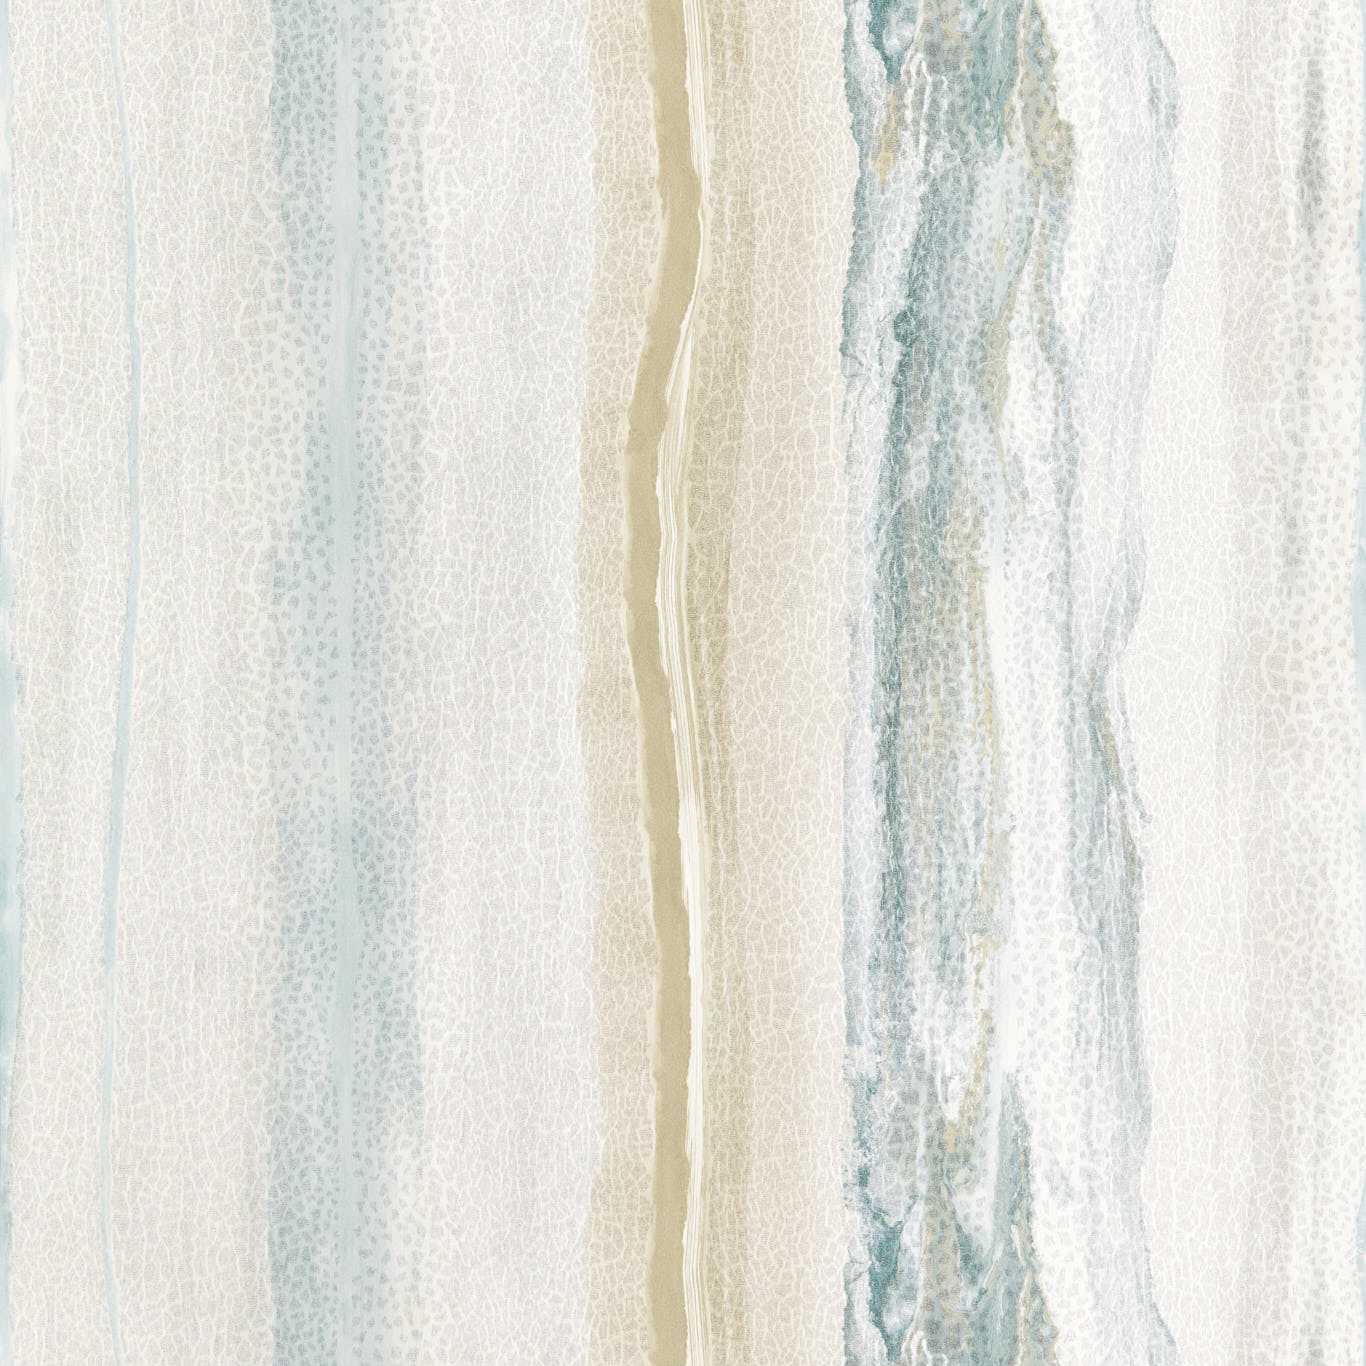 Anthology Vitruvius Pumice / Sandstone Wallpaper by HAR